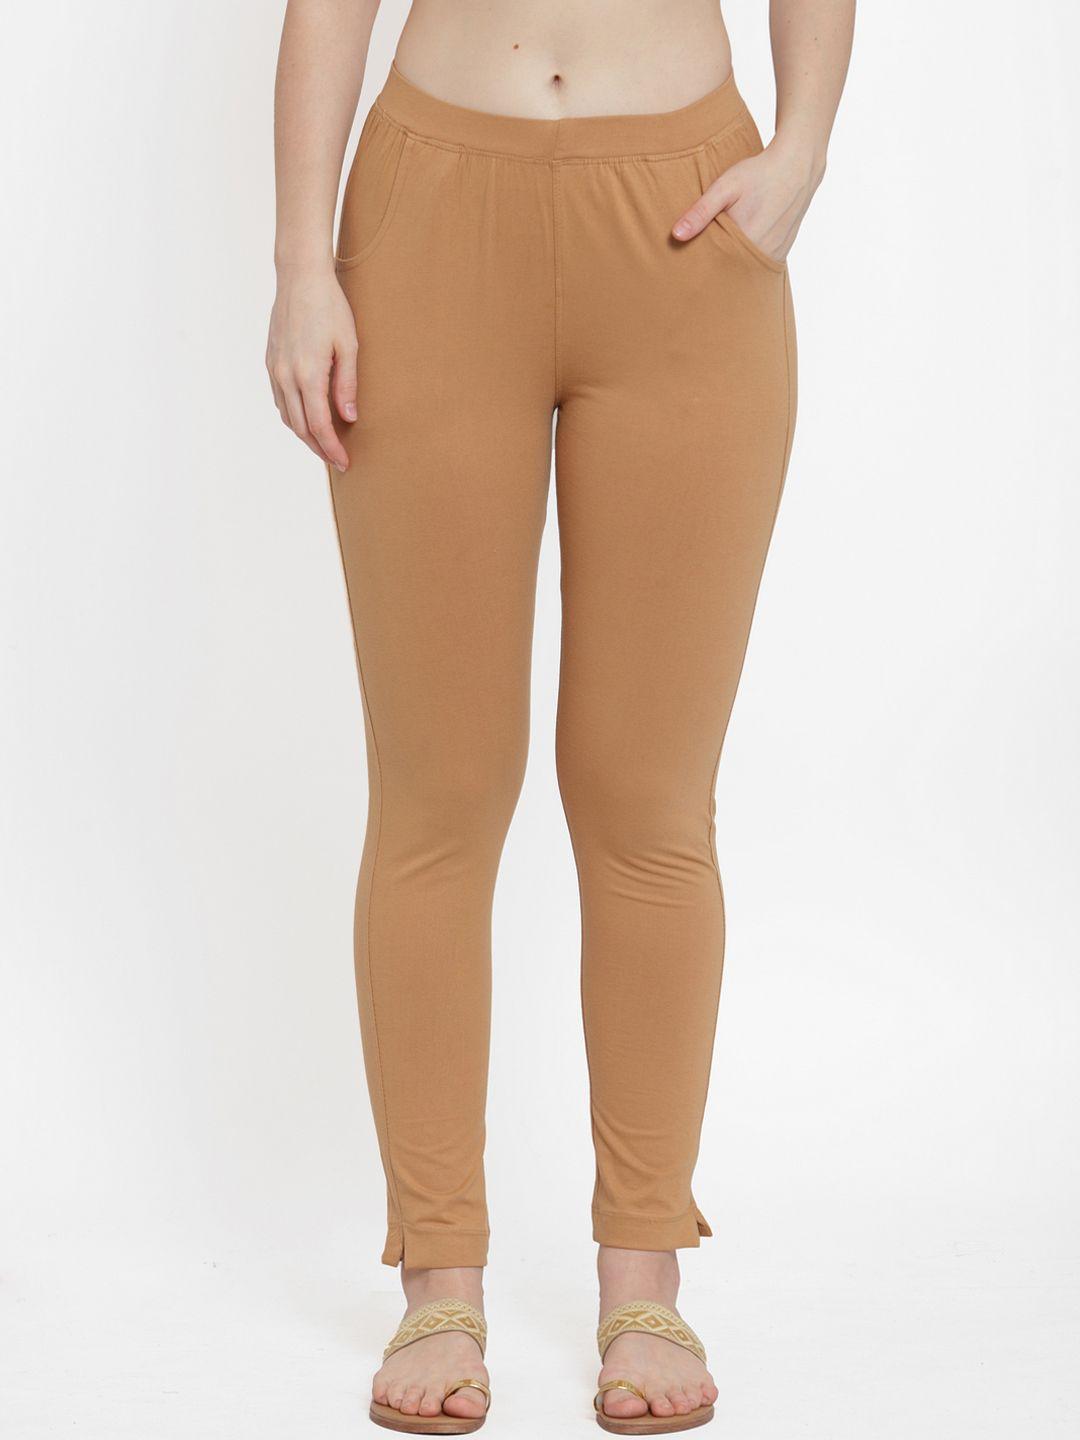 tag 7 women beige solid ankle-length leggings